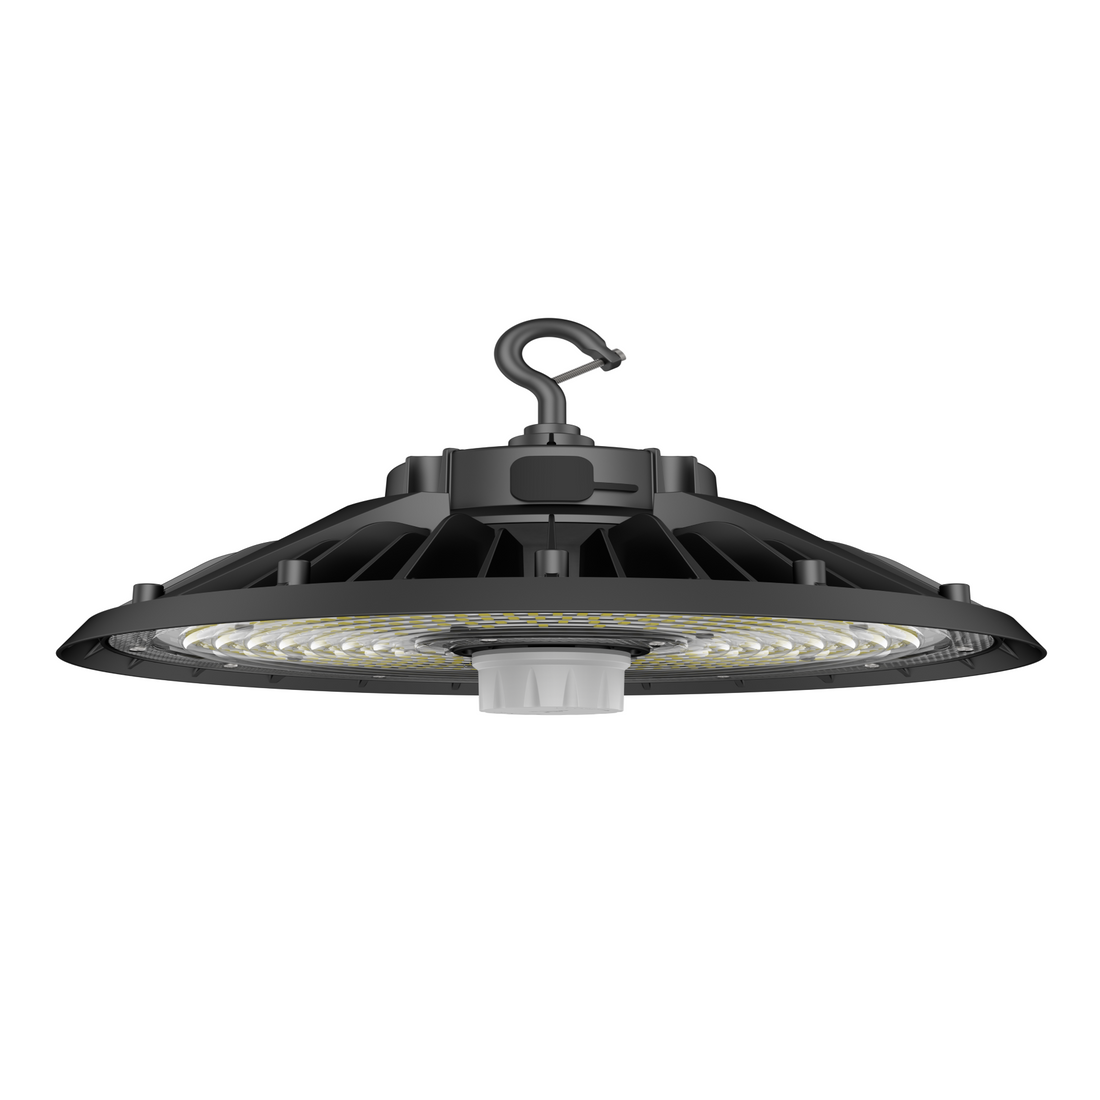 LED UFO High Bay Light 240W - 5000K - 36240Lumens 0-10V Dimmable - With sensor base, 277-480VAC DLC 5.1 Premium, Black